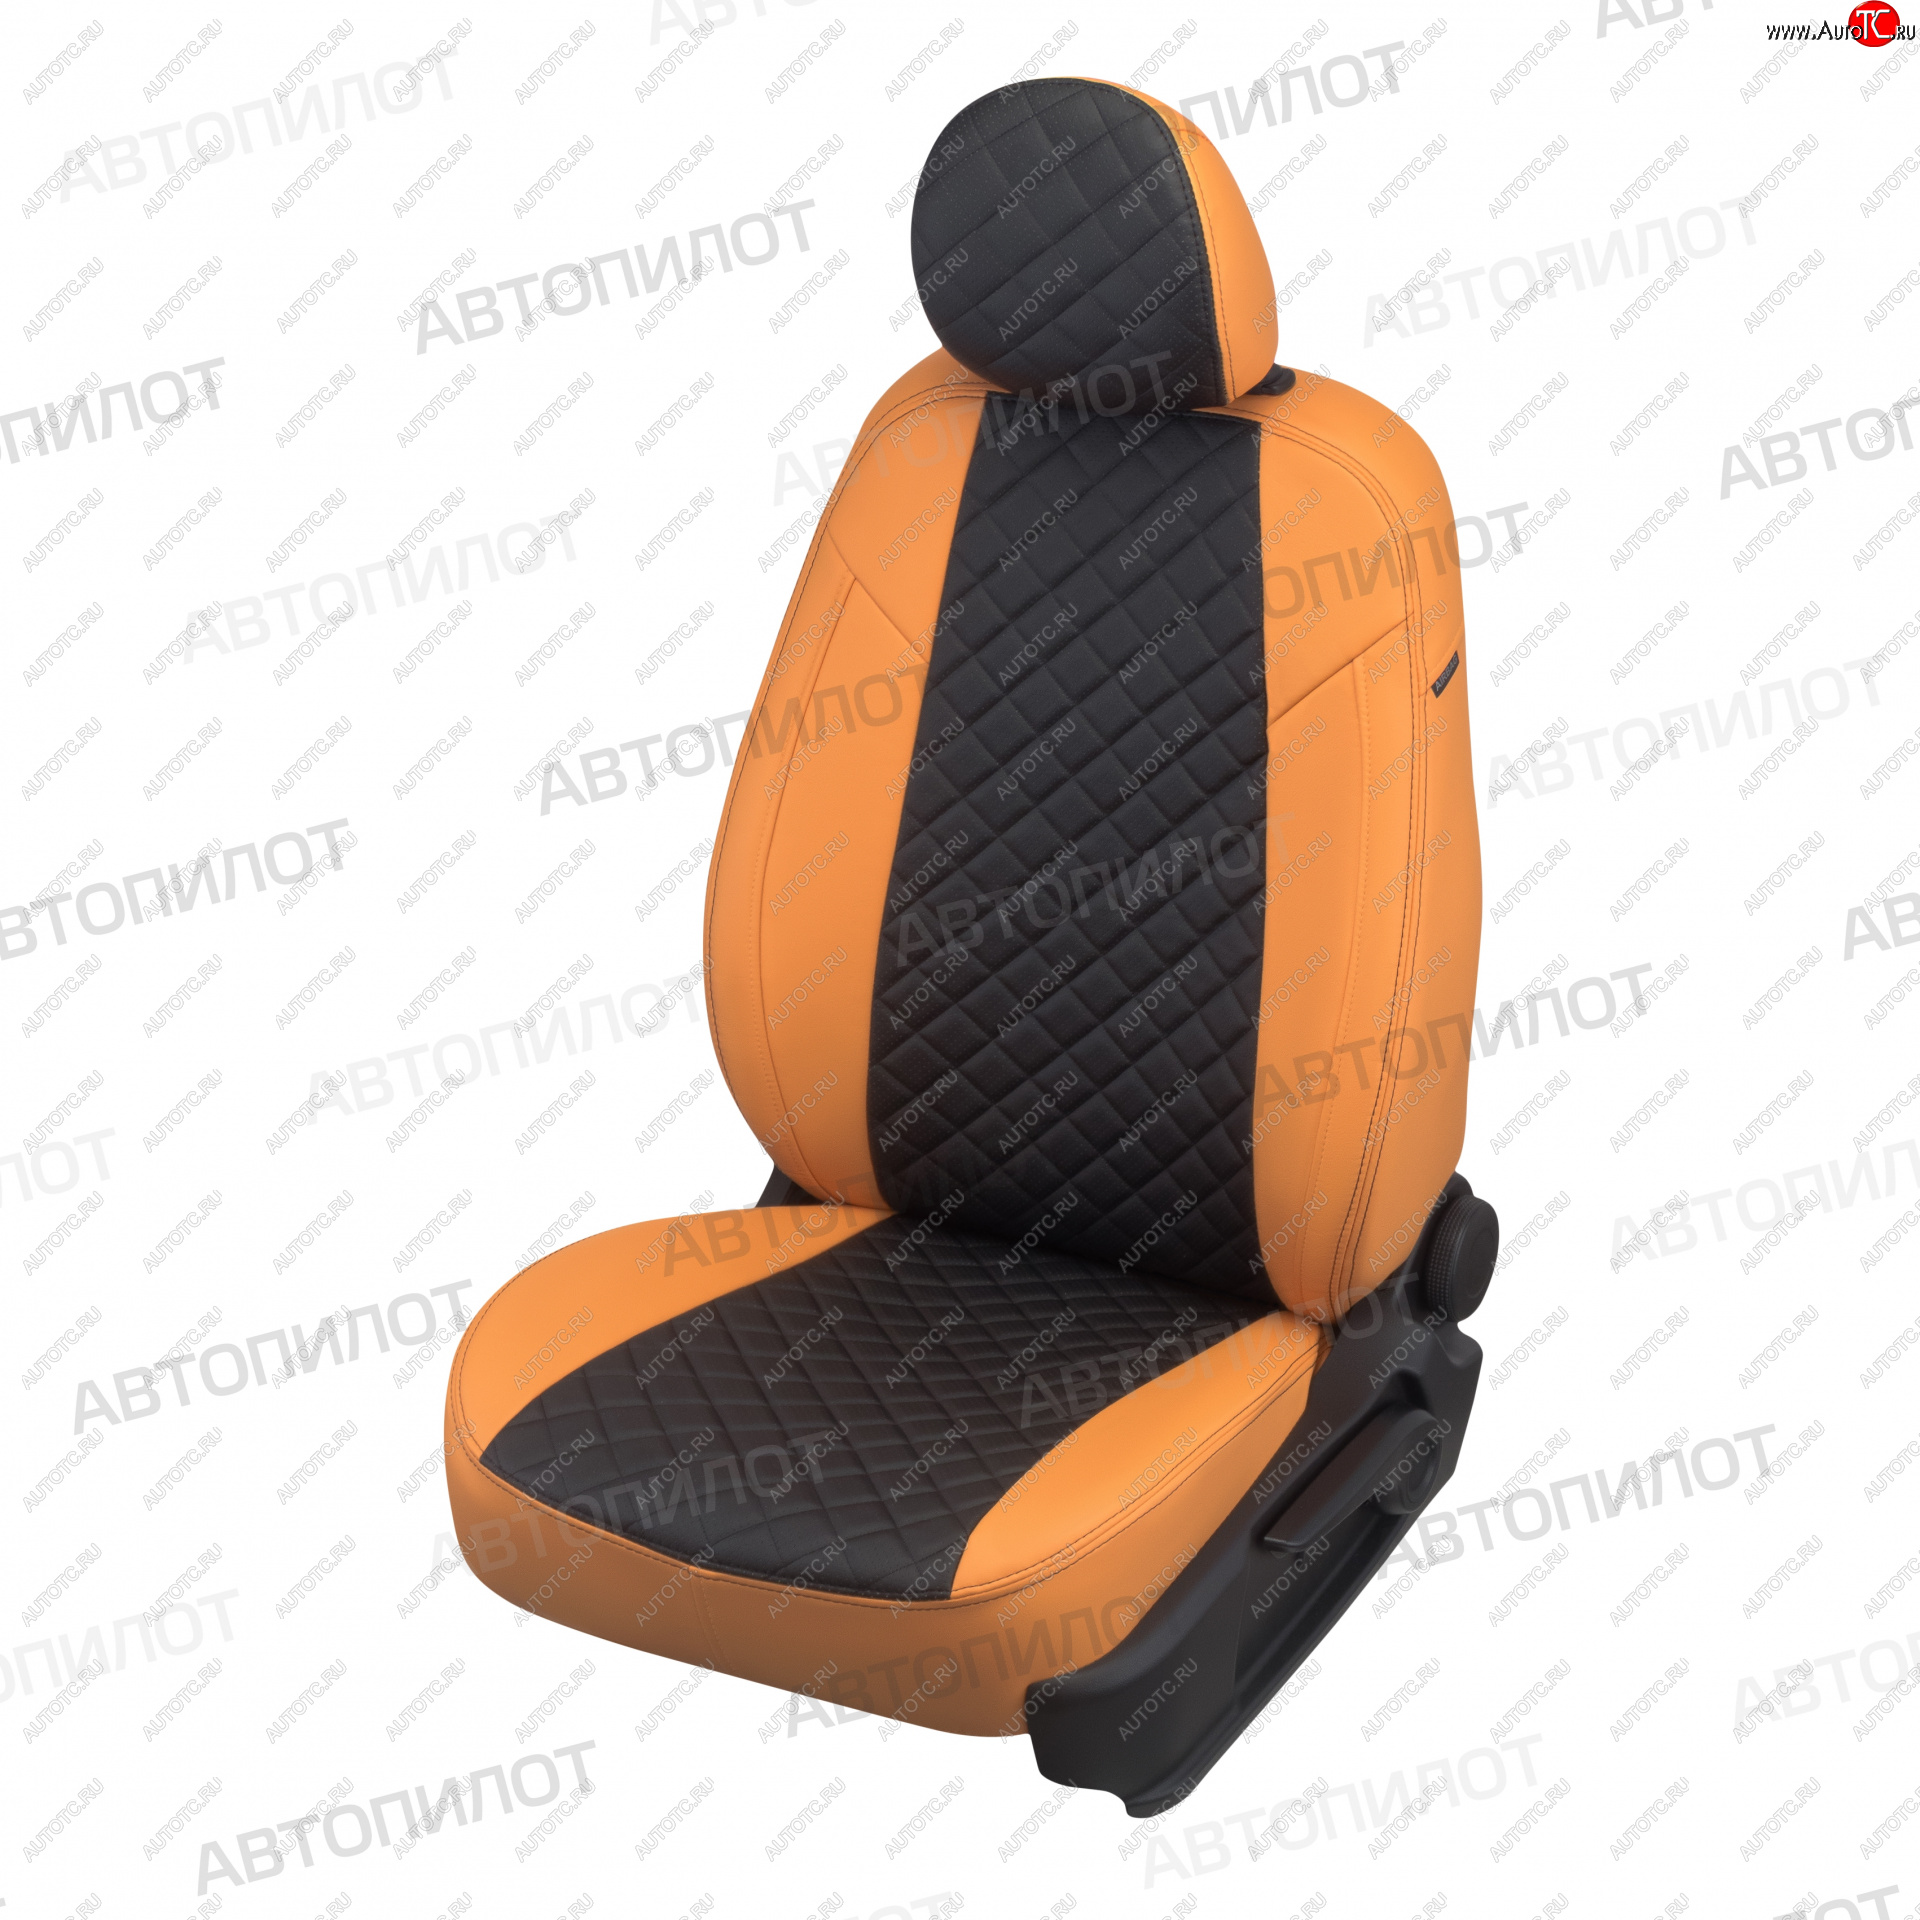 13 999 р. Чехлы сидений (экокожа) Автопилот Ромб  KIA Sportage  3 SL (2010-2016) (оранж/черный)